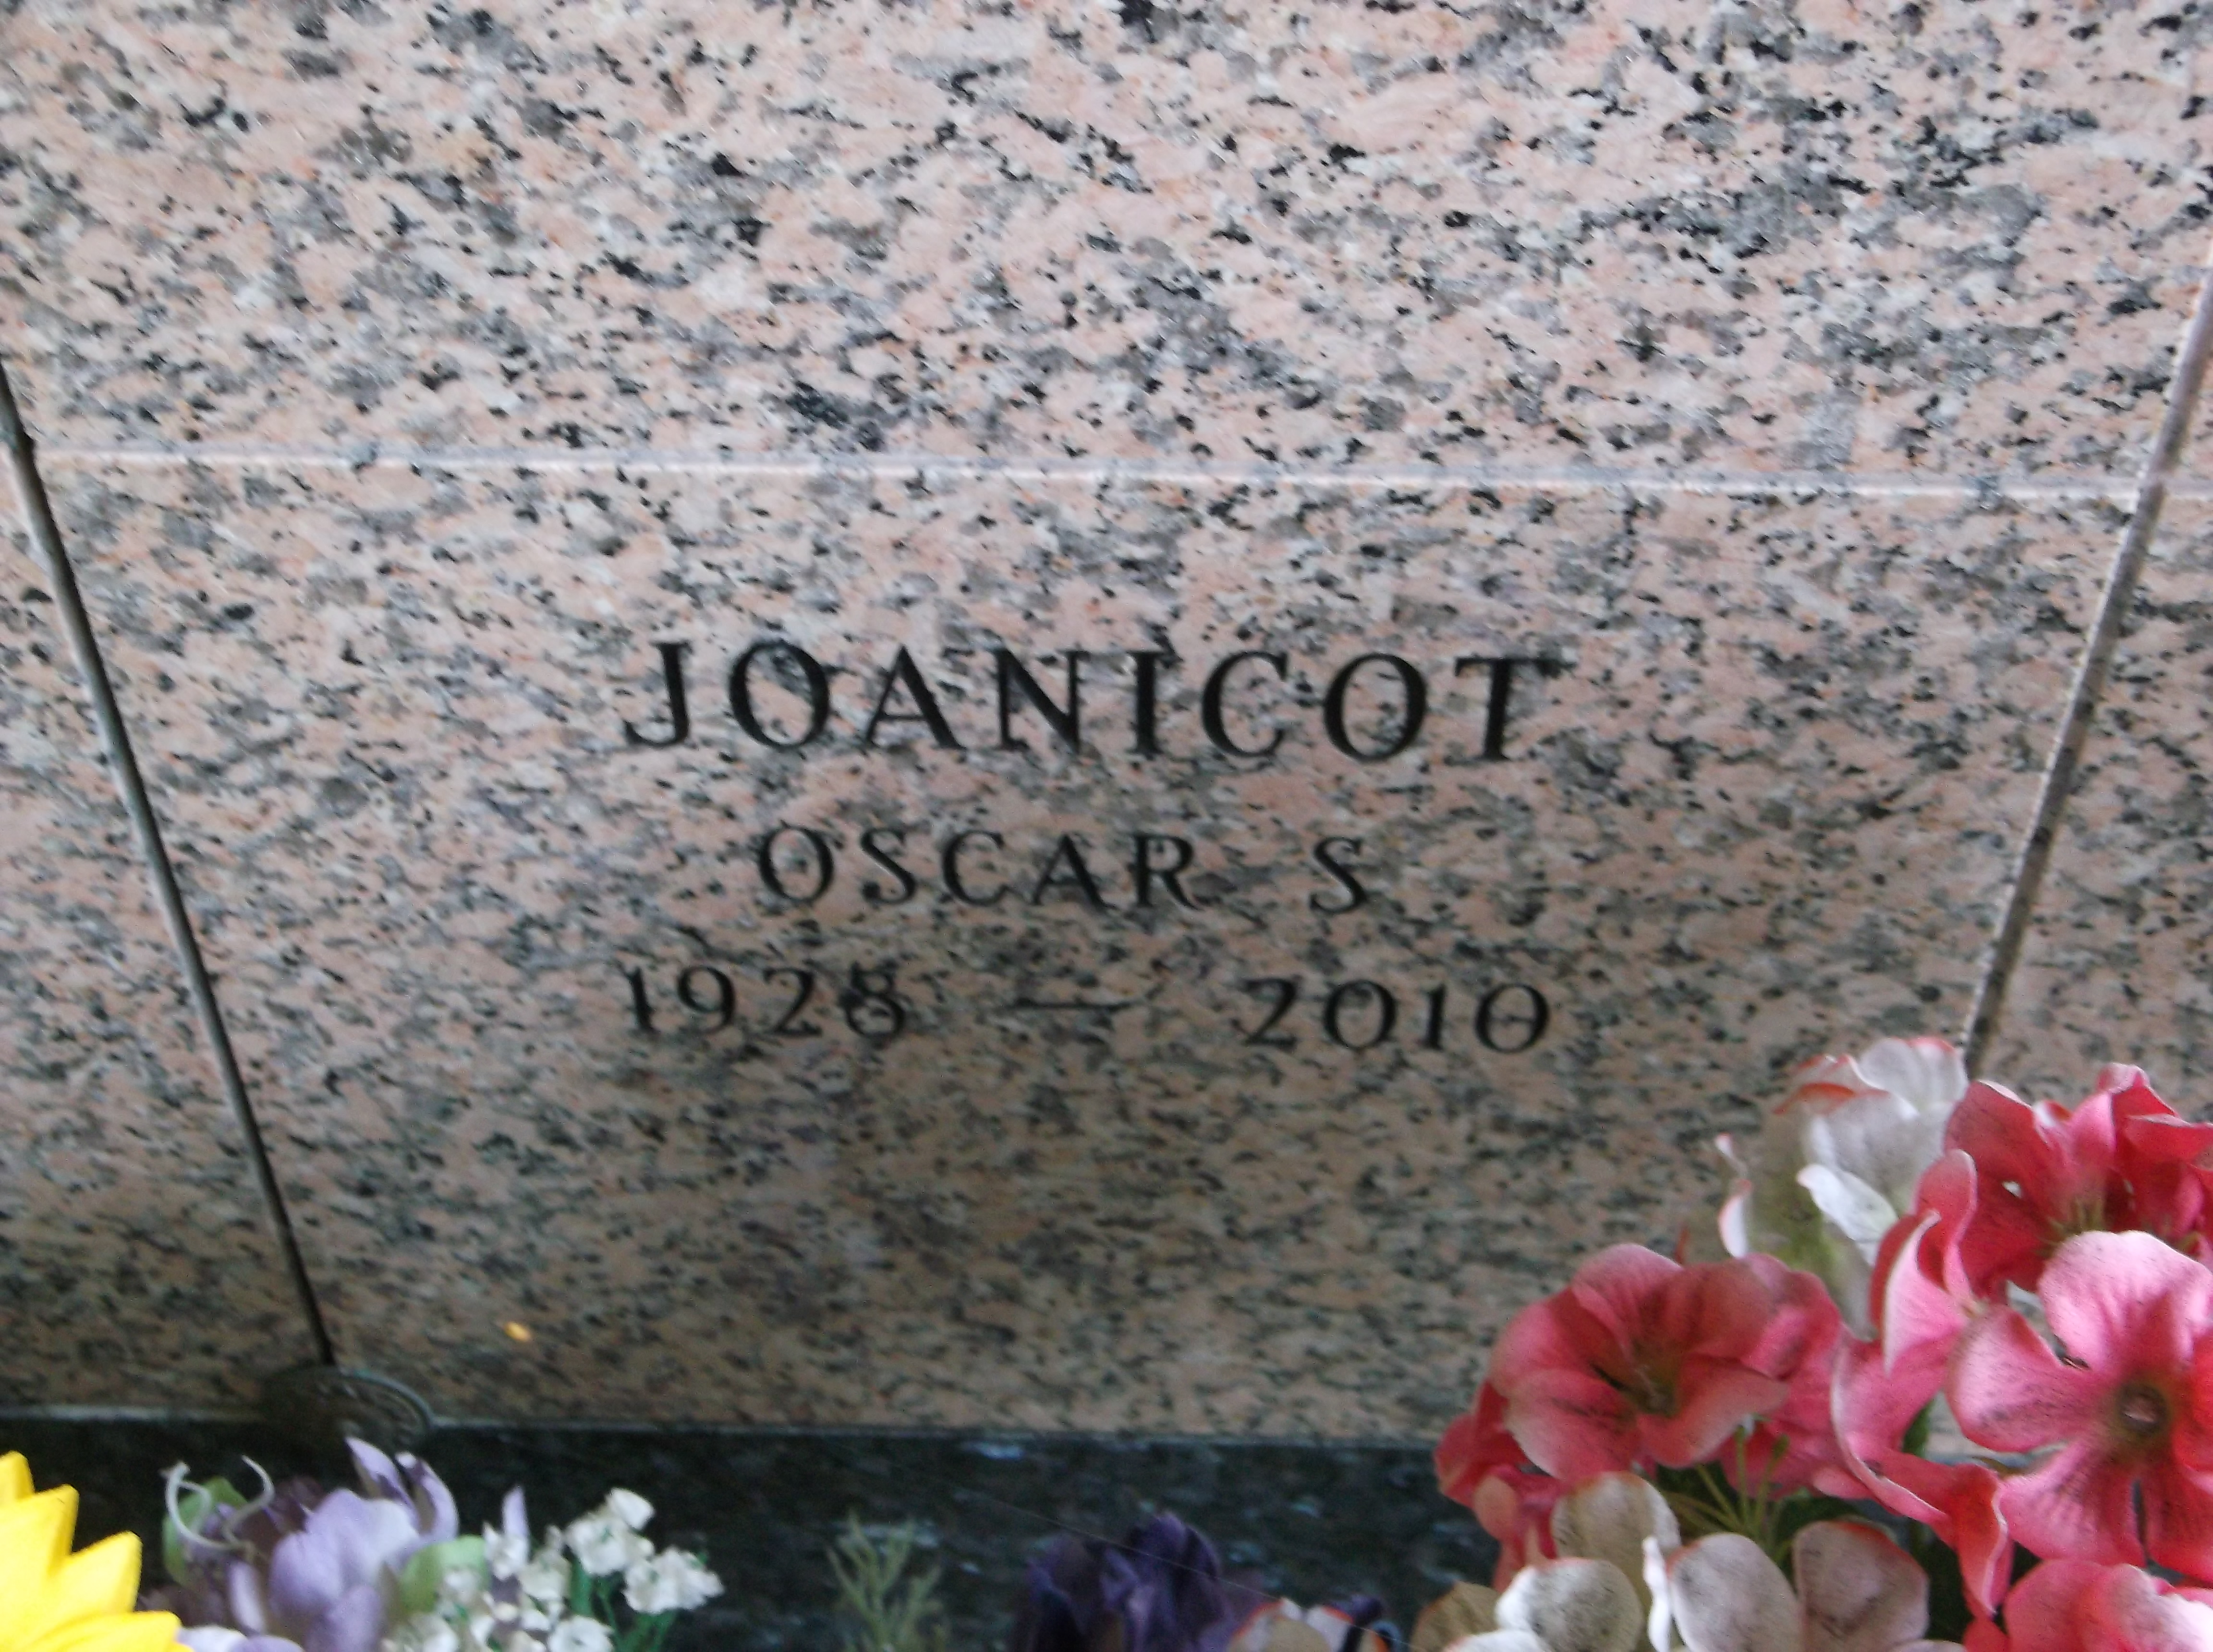 Oscar S Joanicot